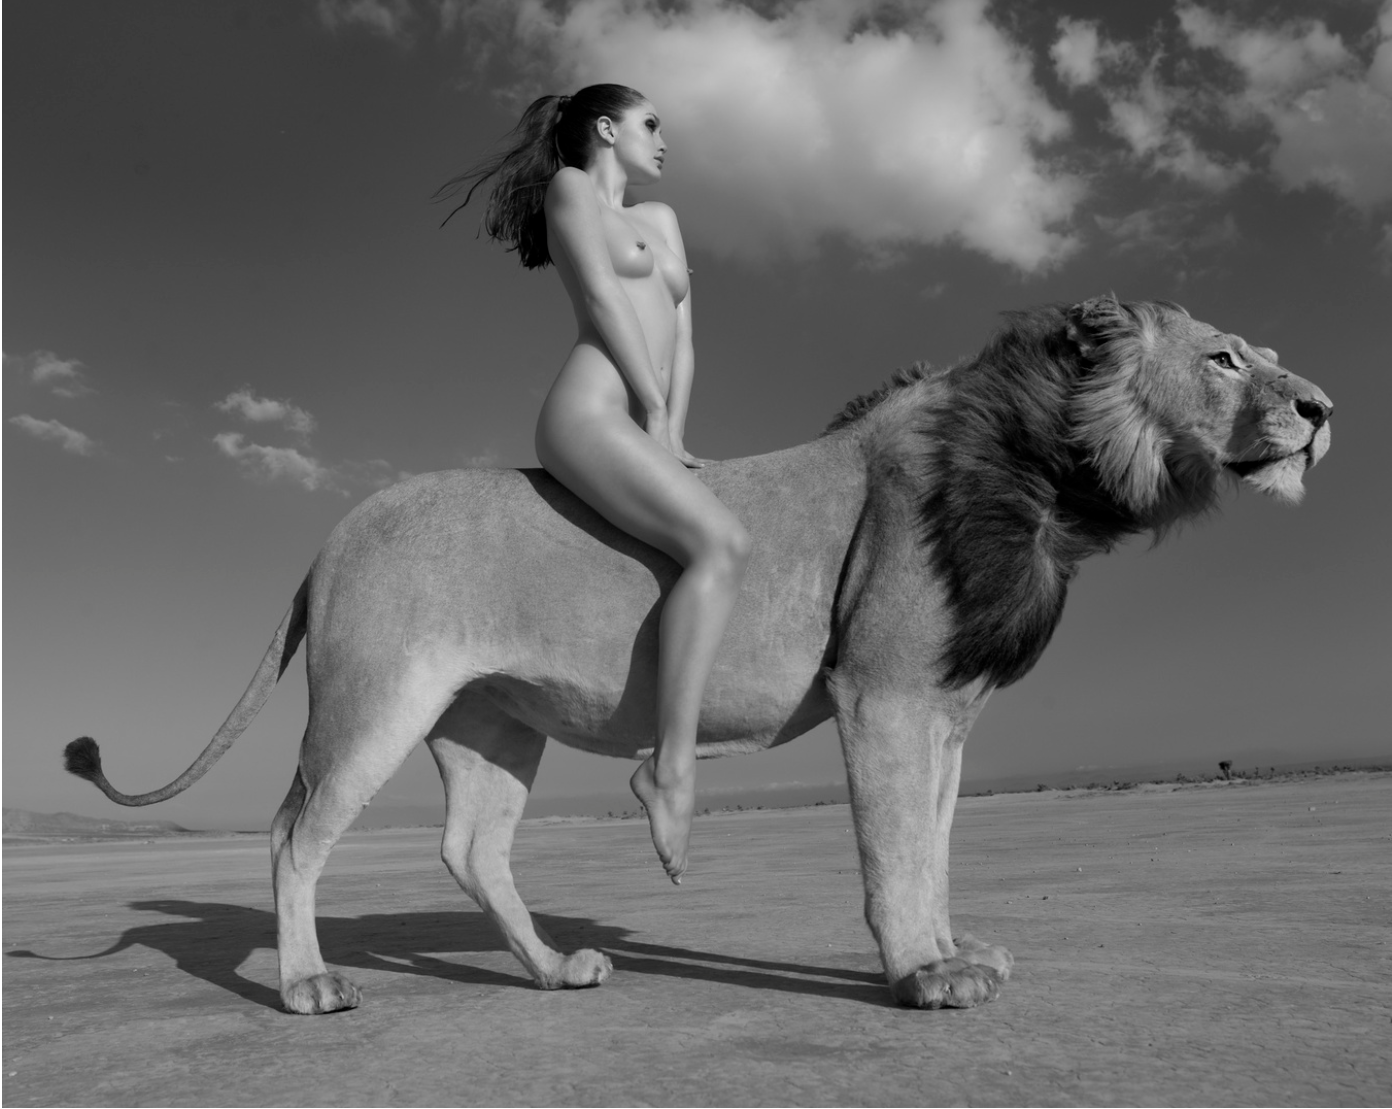 Angela rides the lion